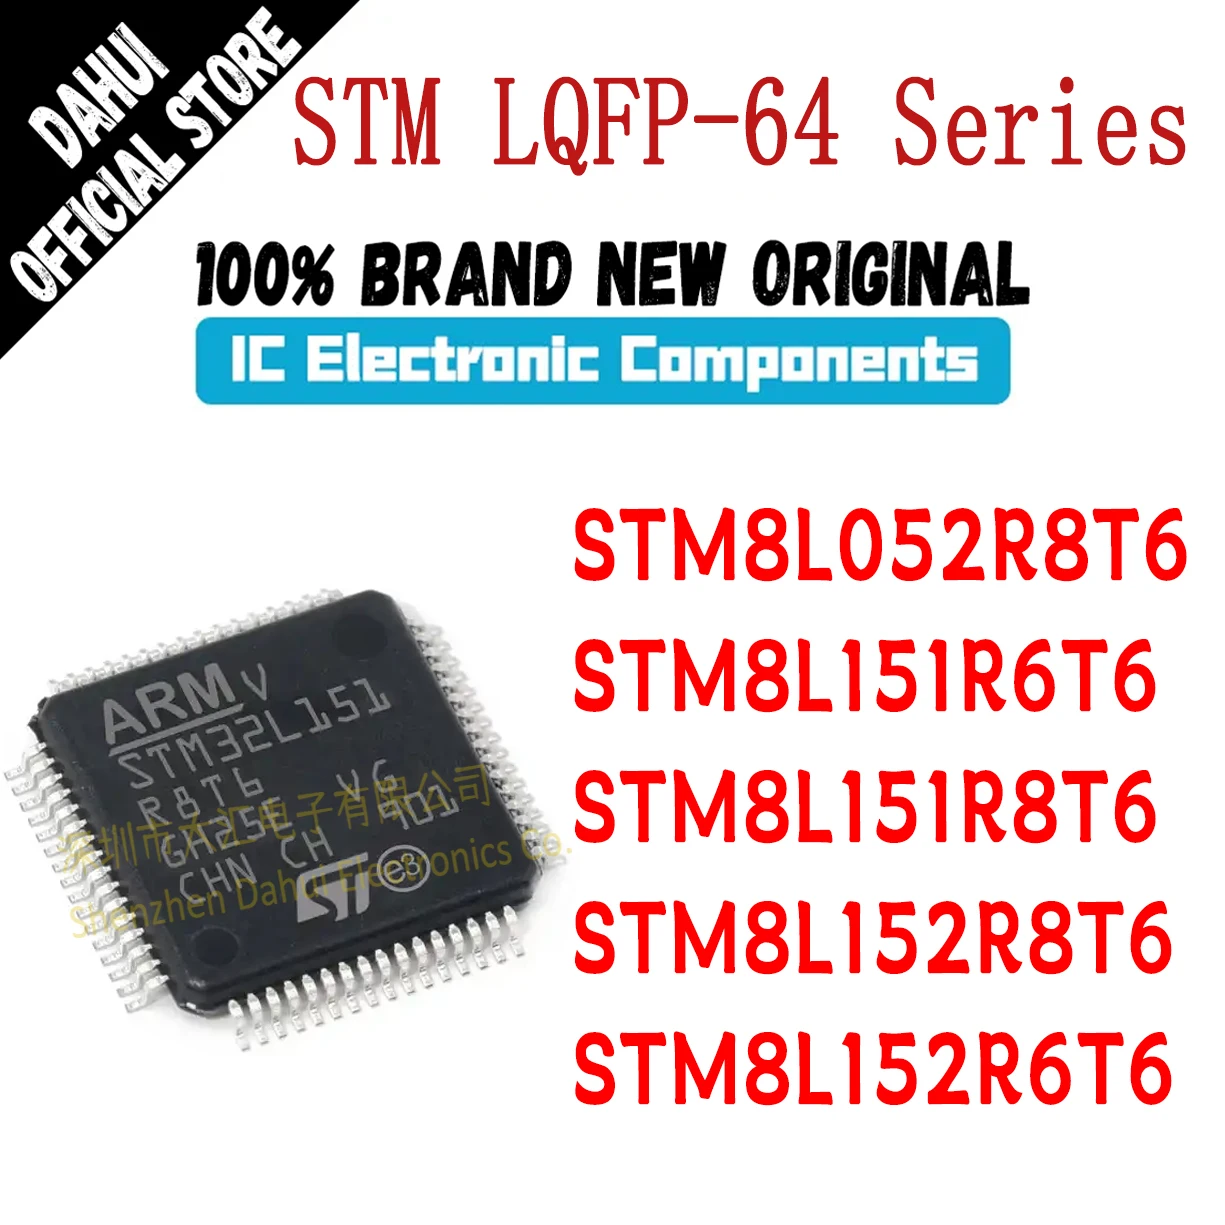 

STM8L052R8T6 STM8L151R6T6 STM8L152R8T6 STM8L151R8T6 STM8L152R6T6 STM IC MCU Chip LQFP-64 Quality Brand New